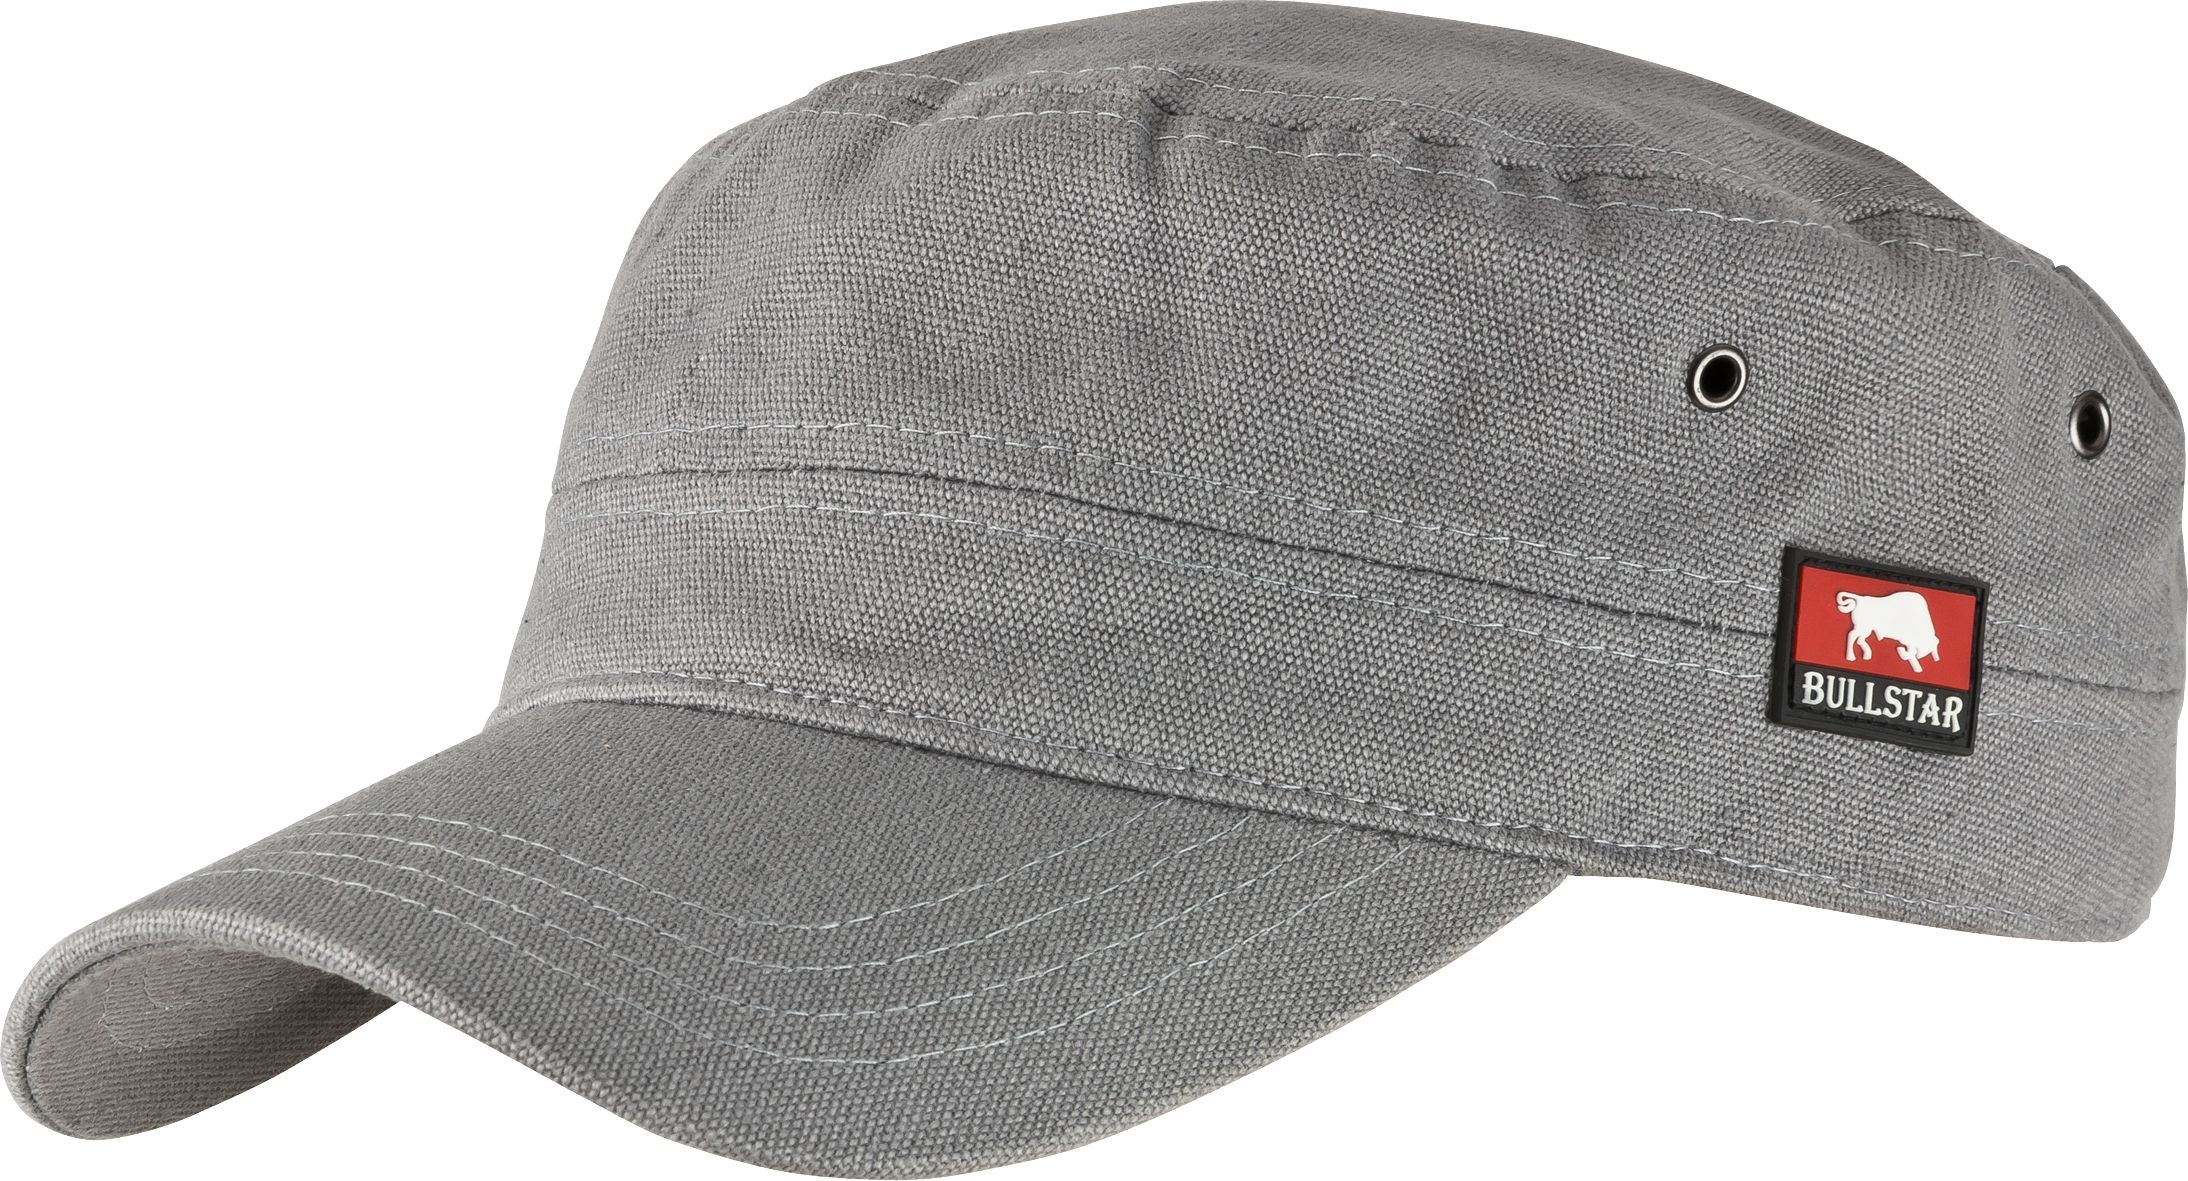 BULLSTAR Army-Cap, Grau, Einheitsgröße